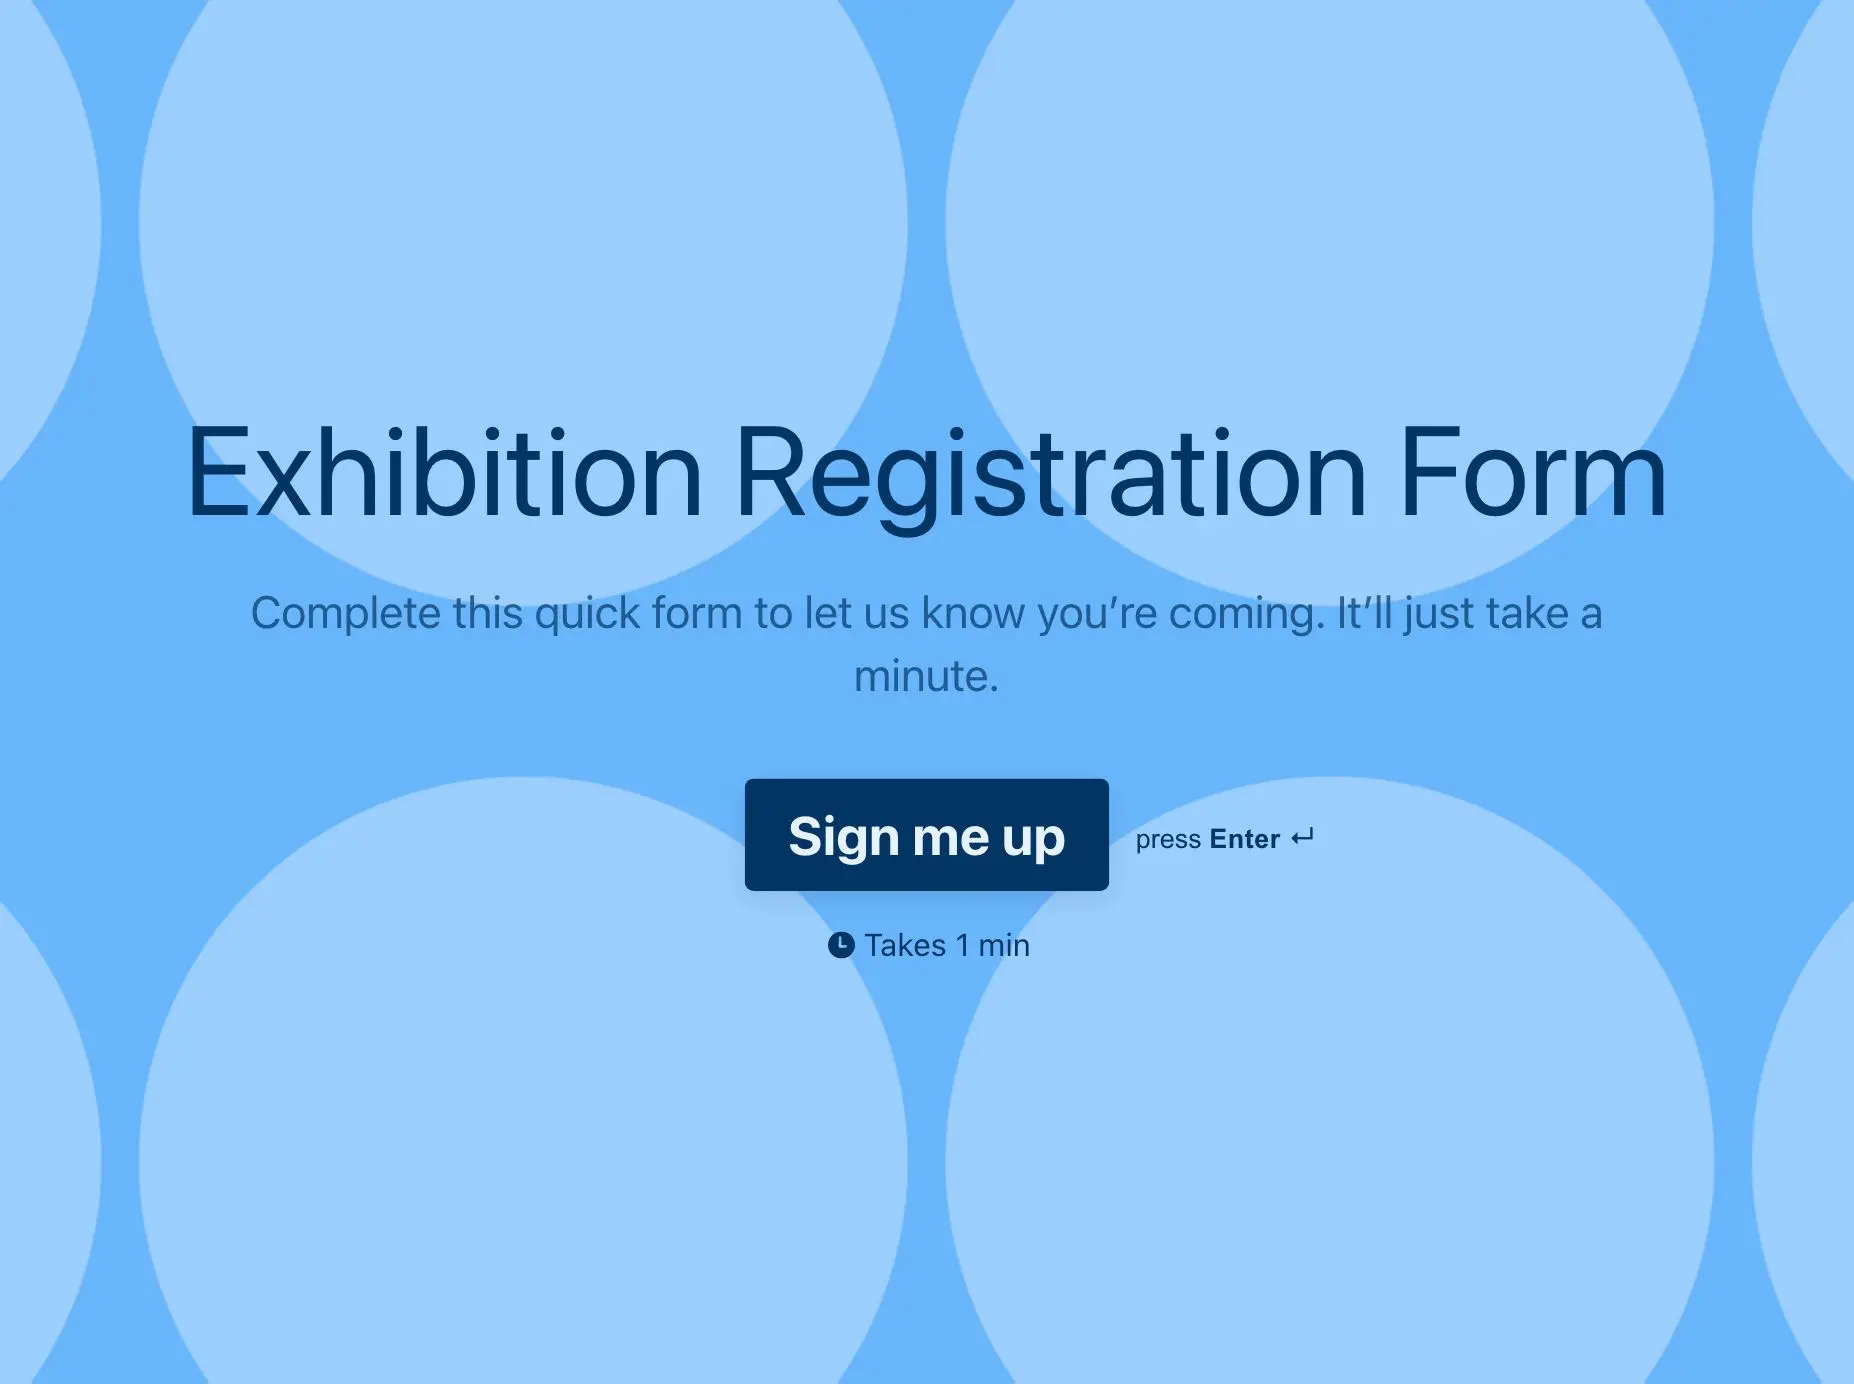 Exhibition Registration Form Template Hero